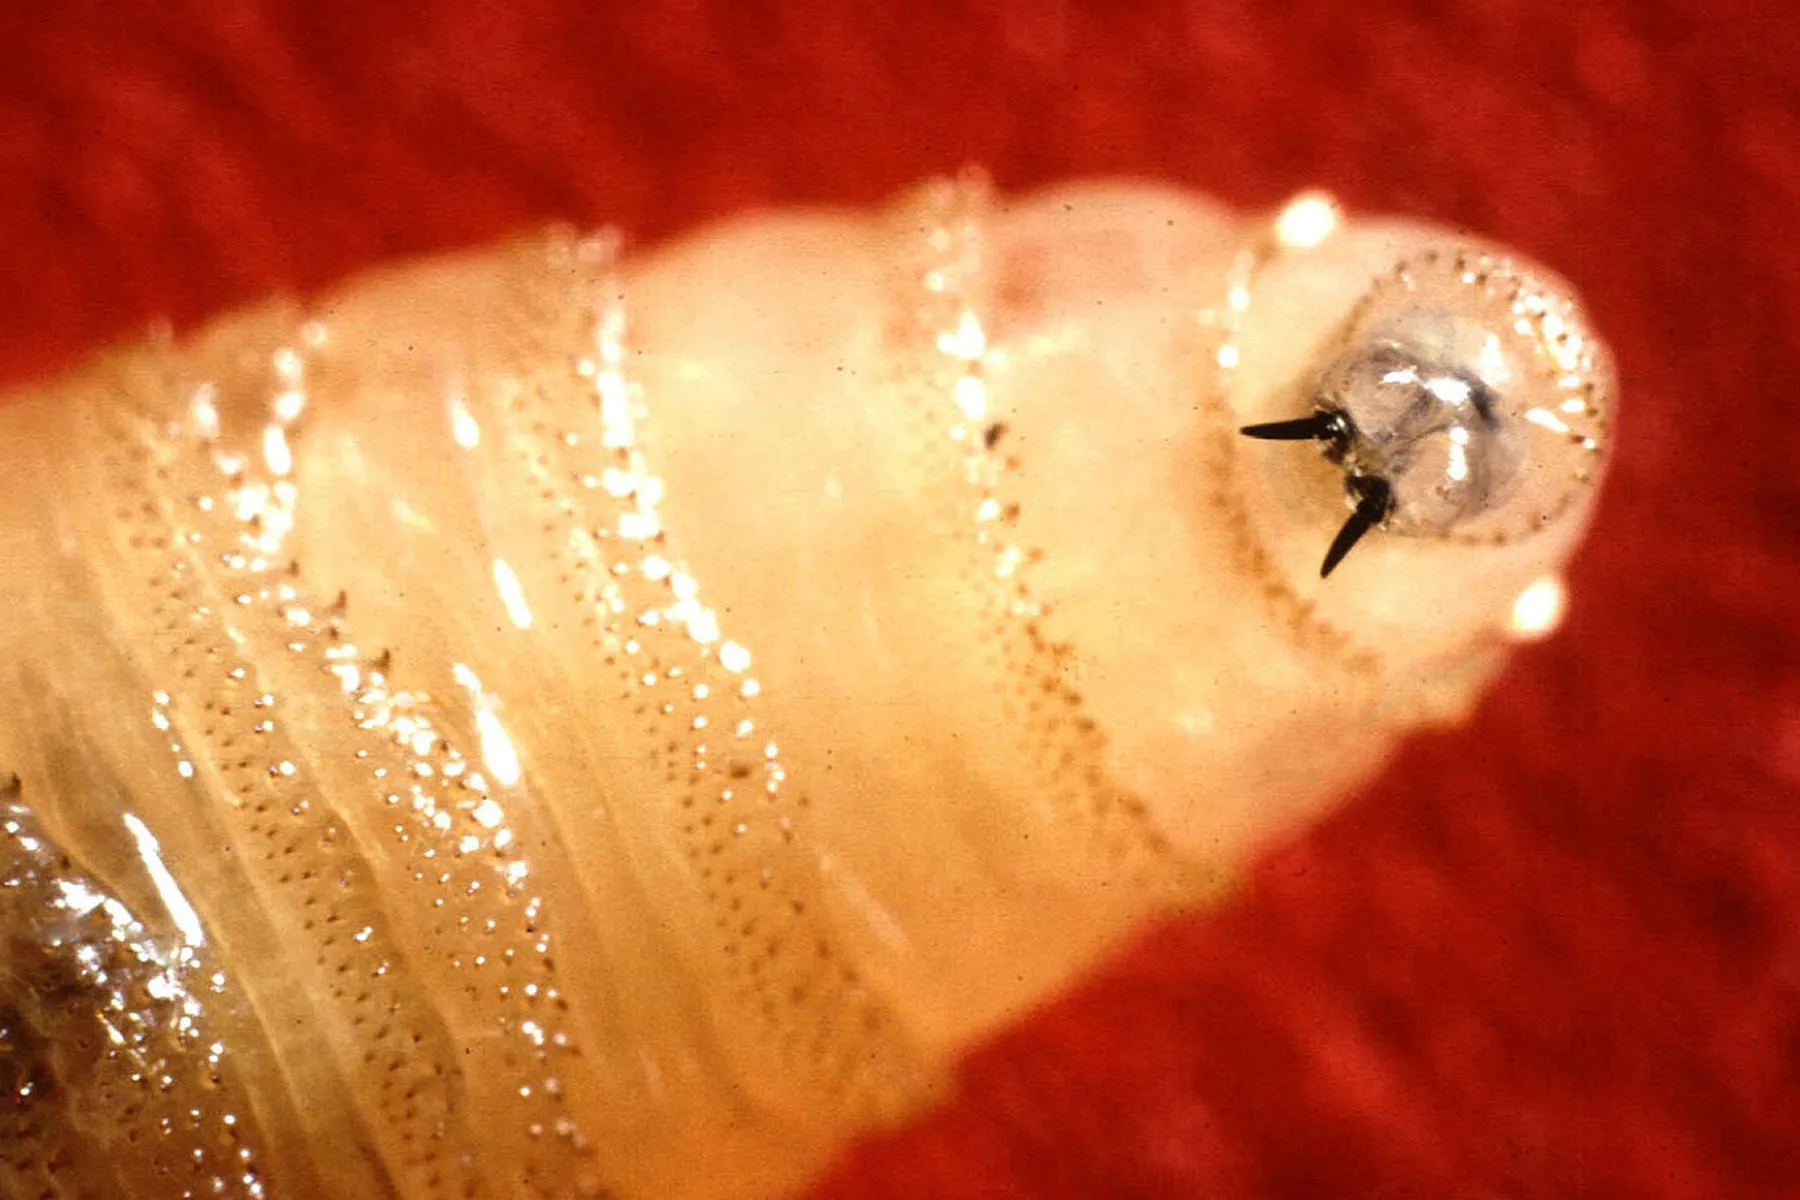 Trichinella pinworms